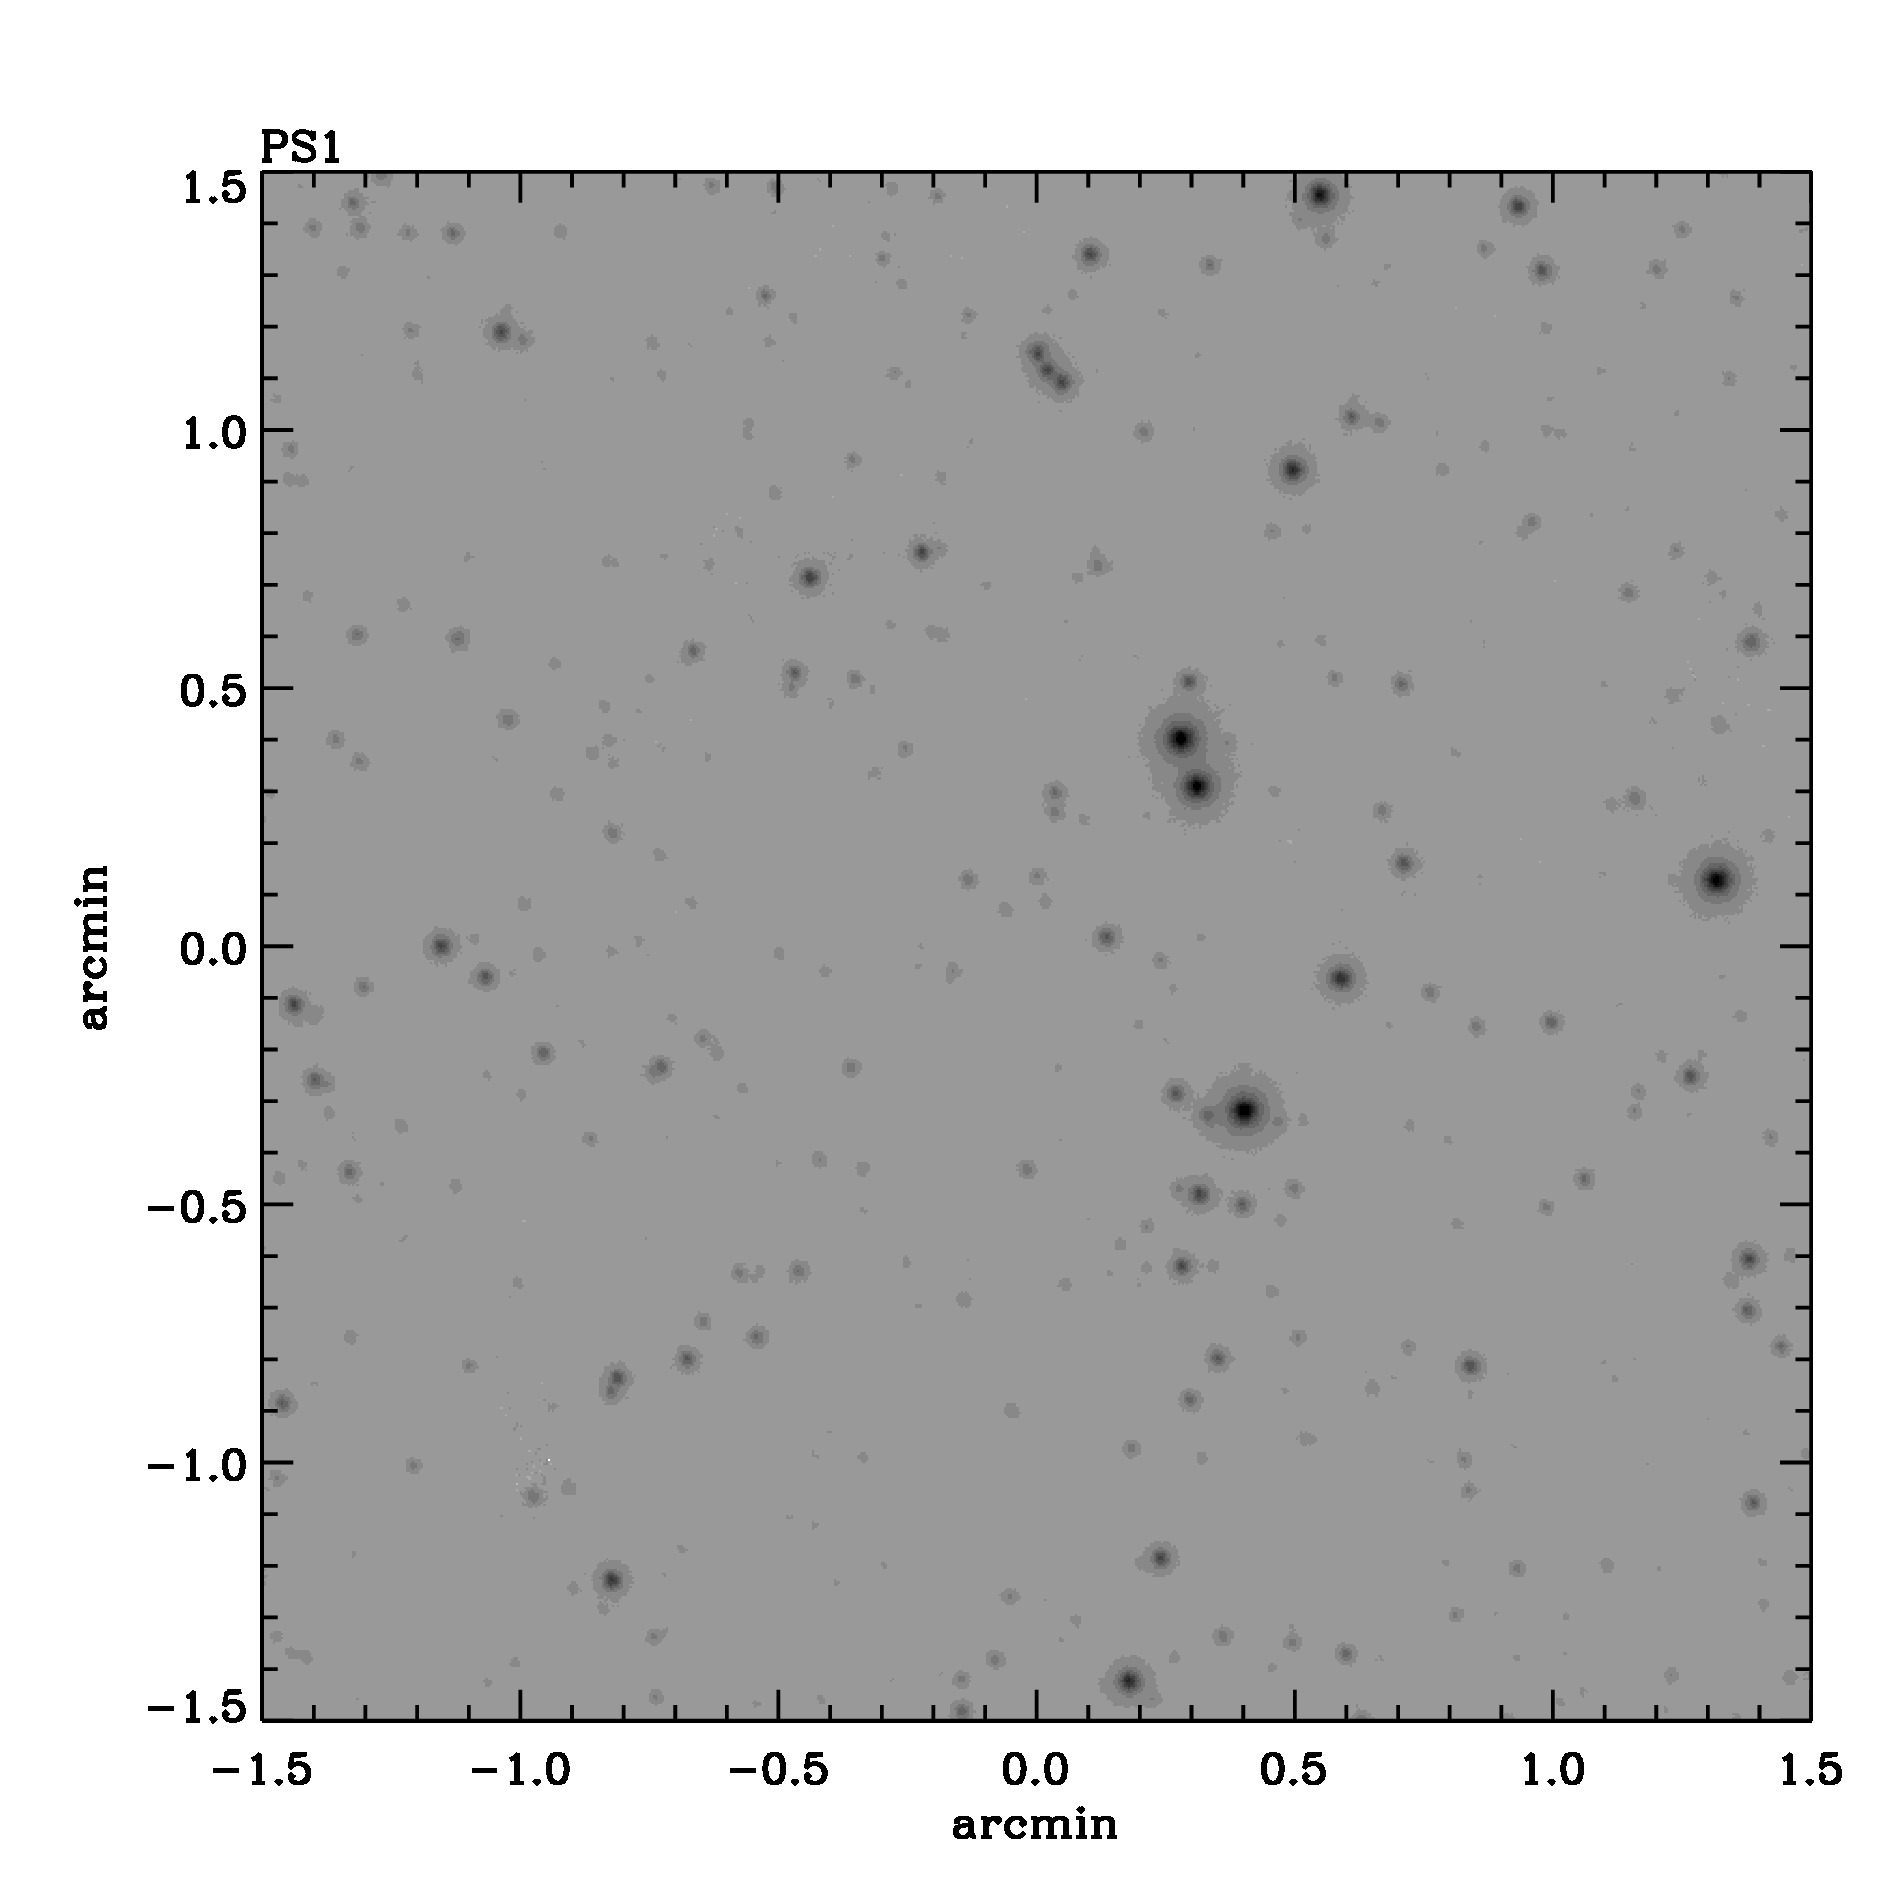 Optical image for SWIFT J2204.2+6155